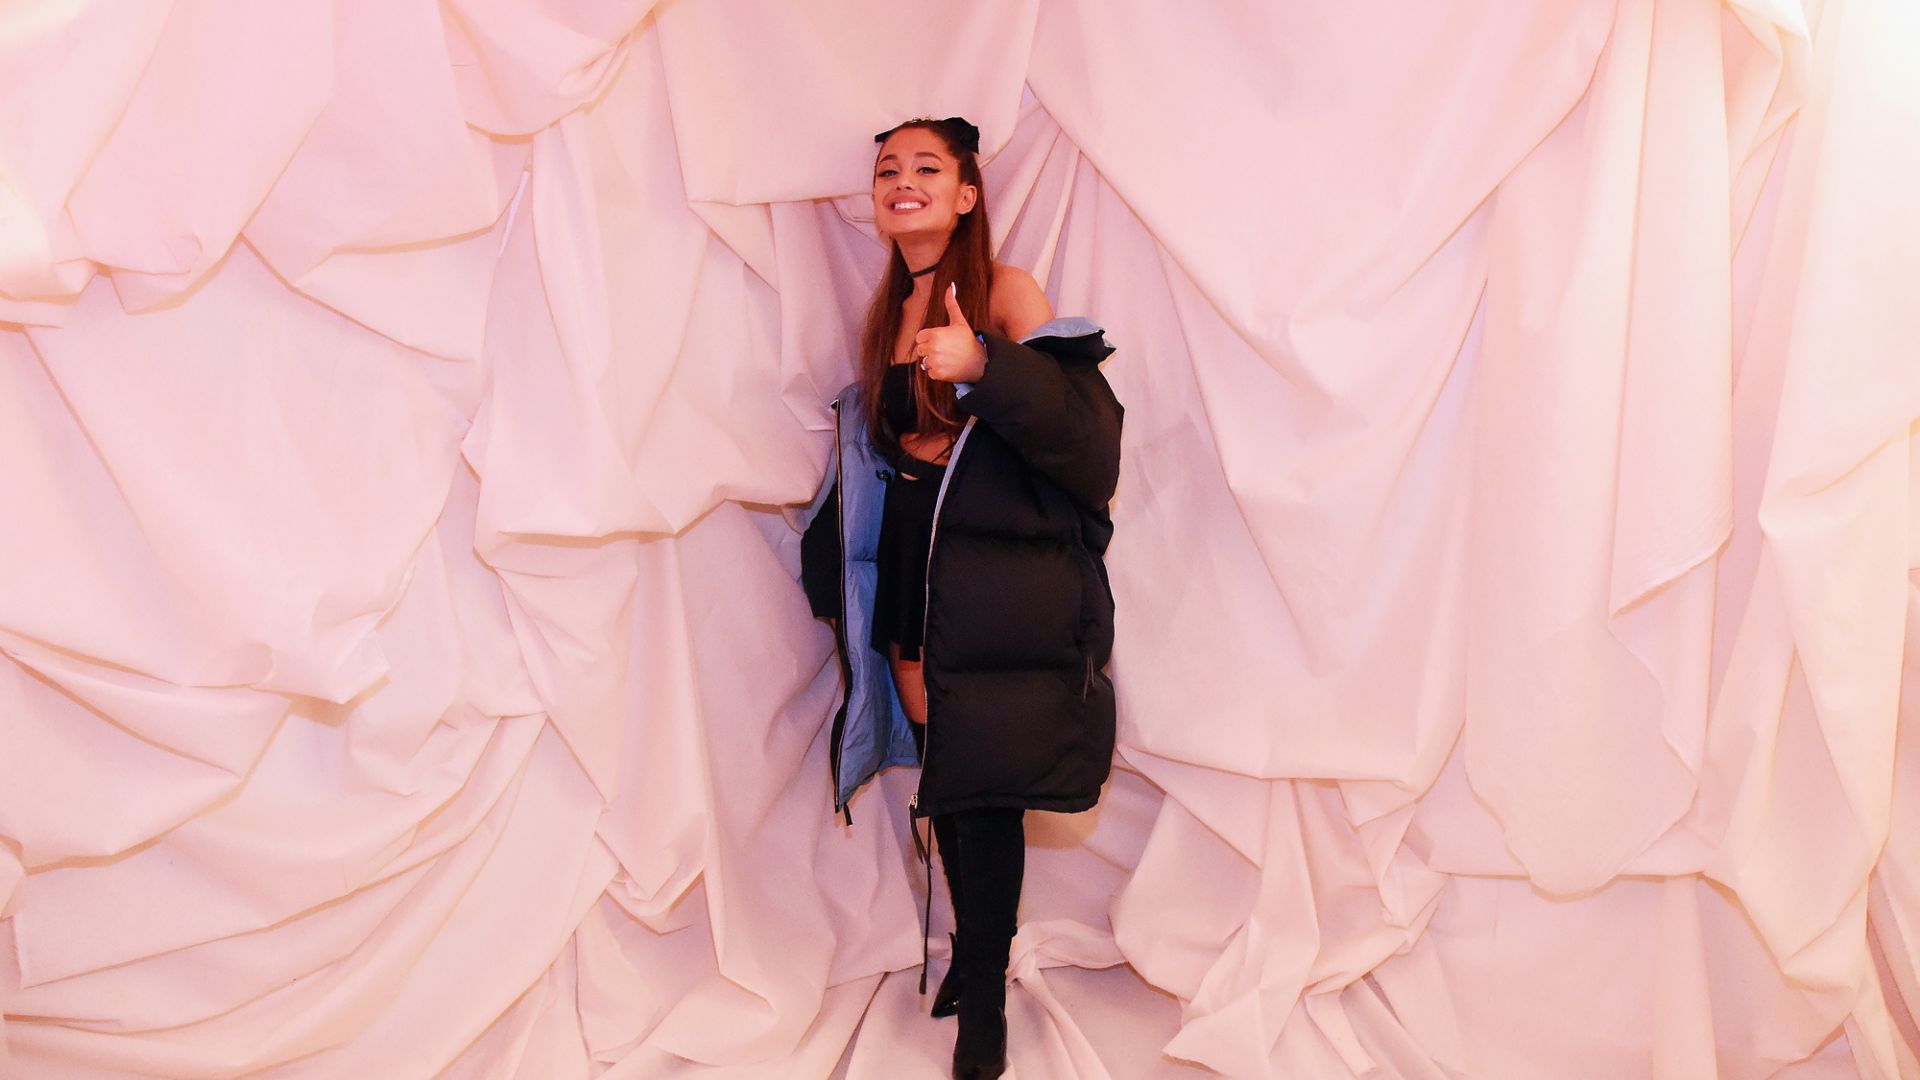 Ariana Grande Wallpapers